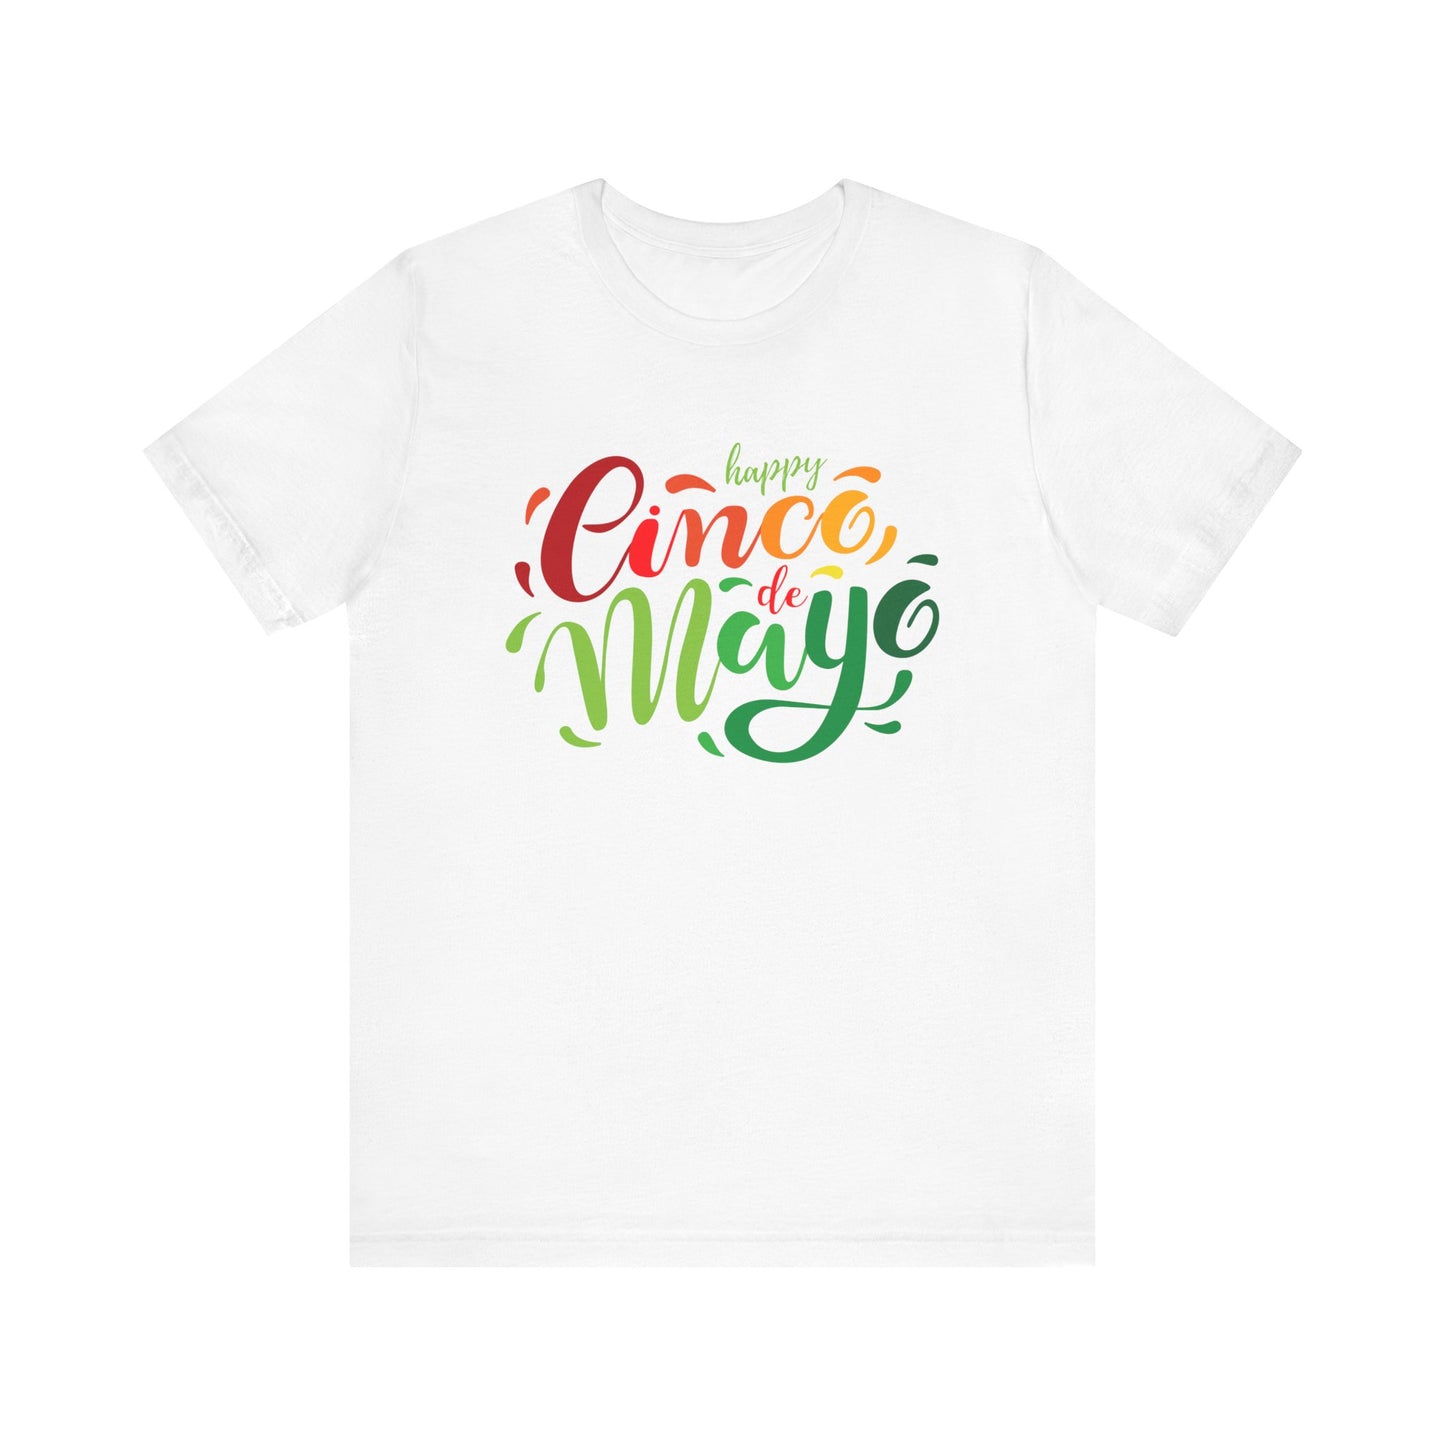 Fiesta T-Shirt For Cinco de Mayo T Shirt For Mexico Holiday TShirt